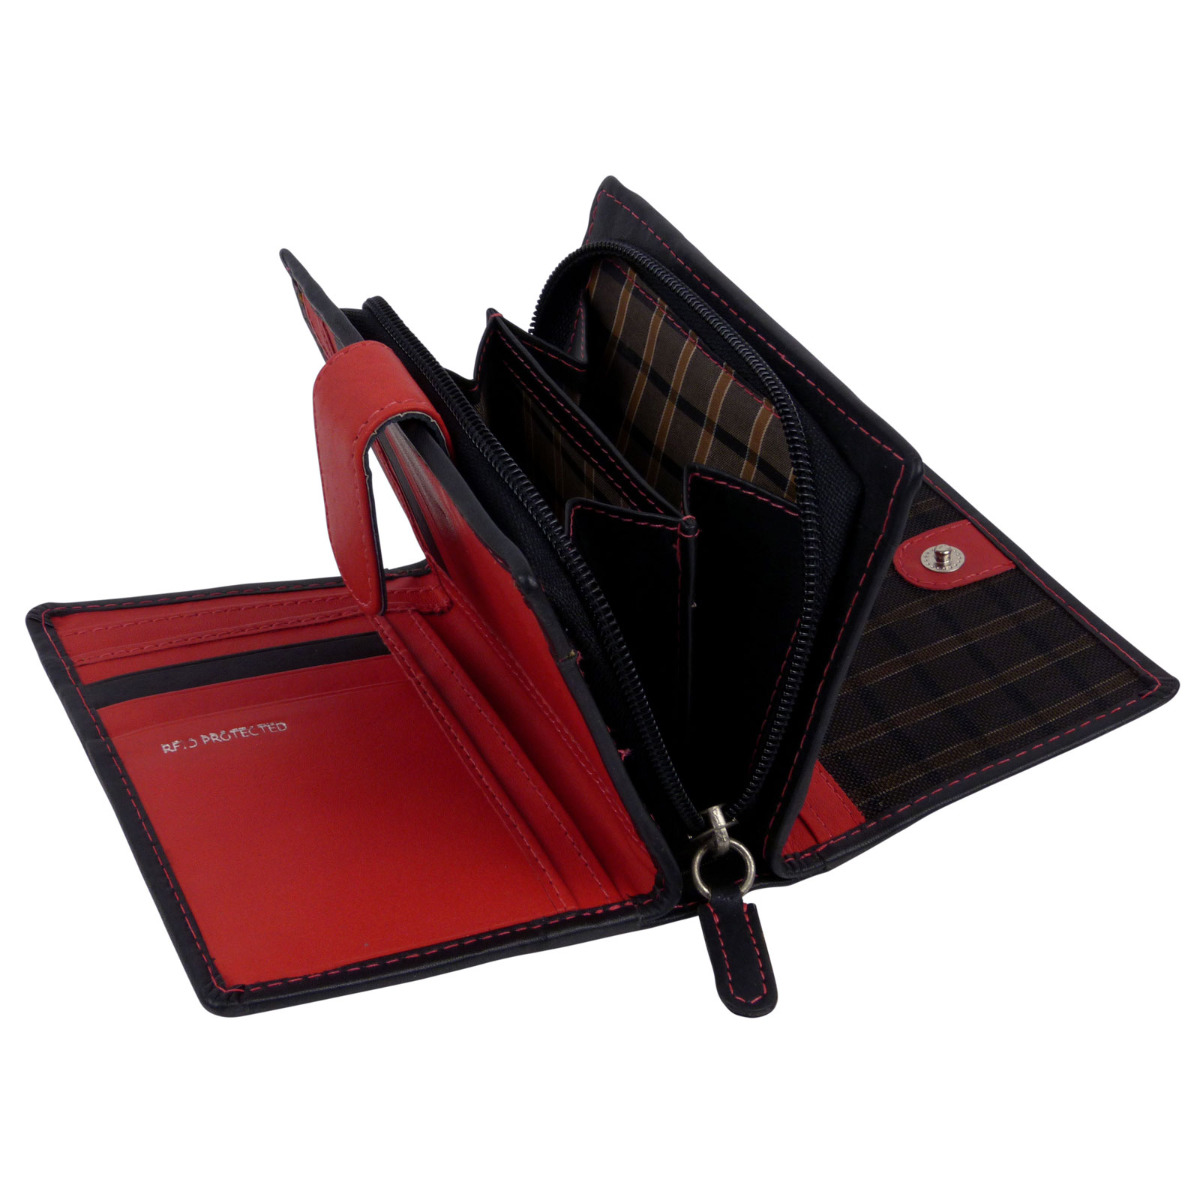 Golunski RFID Blocking Ladies Large Envelope Leather Purse 18 x 9.5 x 2 cms Black